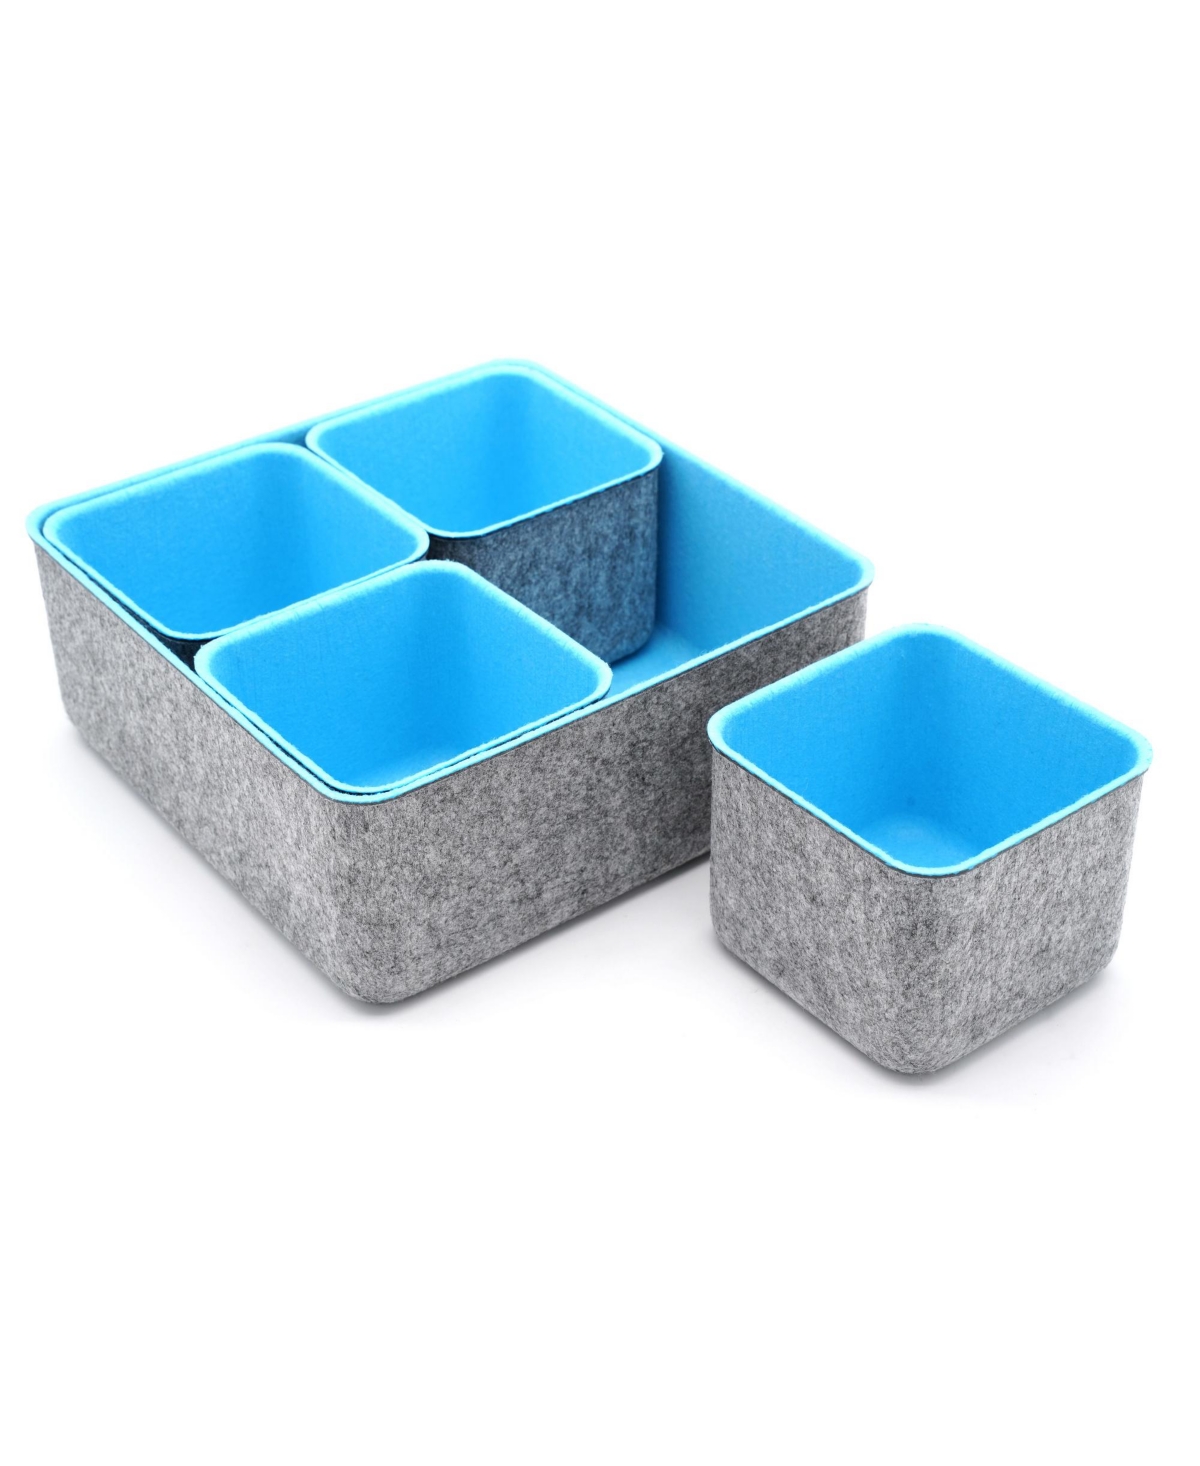 Welaxy 5 Piece Square Felt Storage Bin Set In Baby Blue